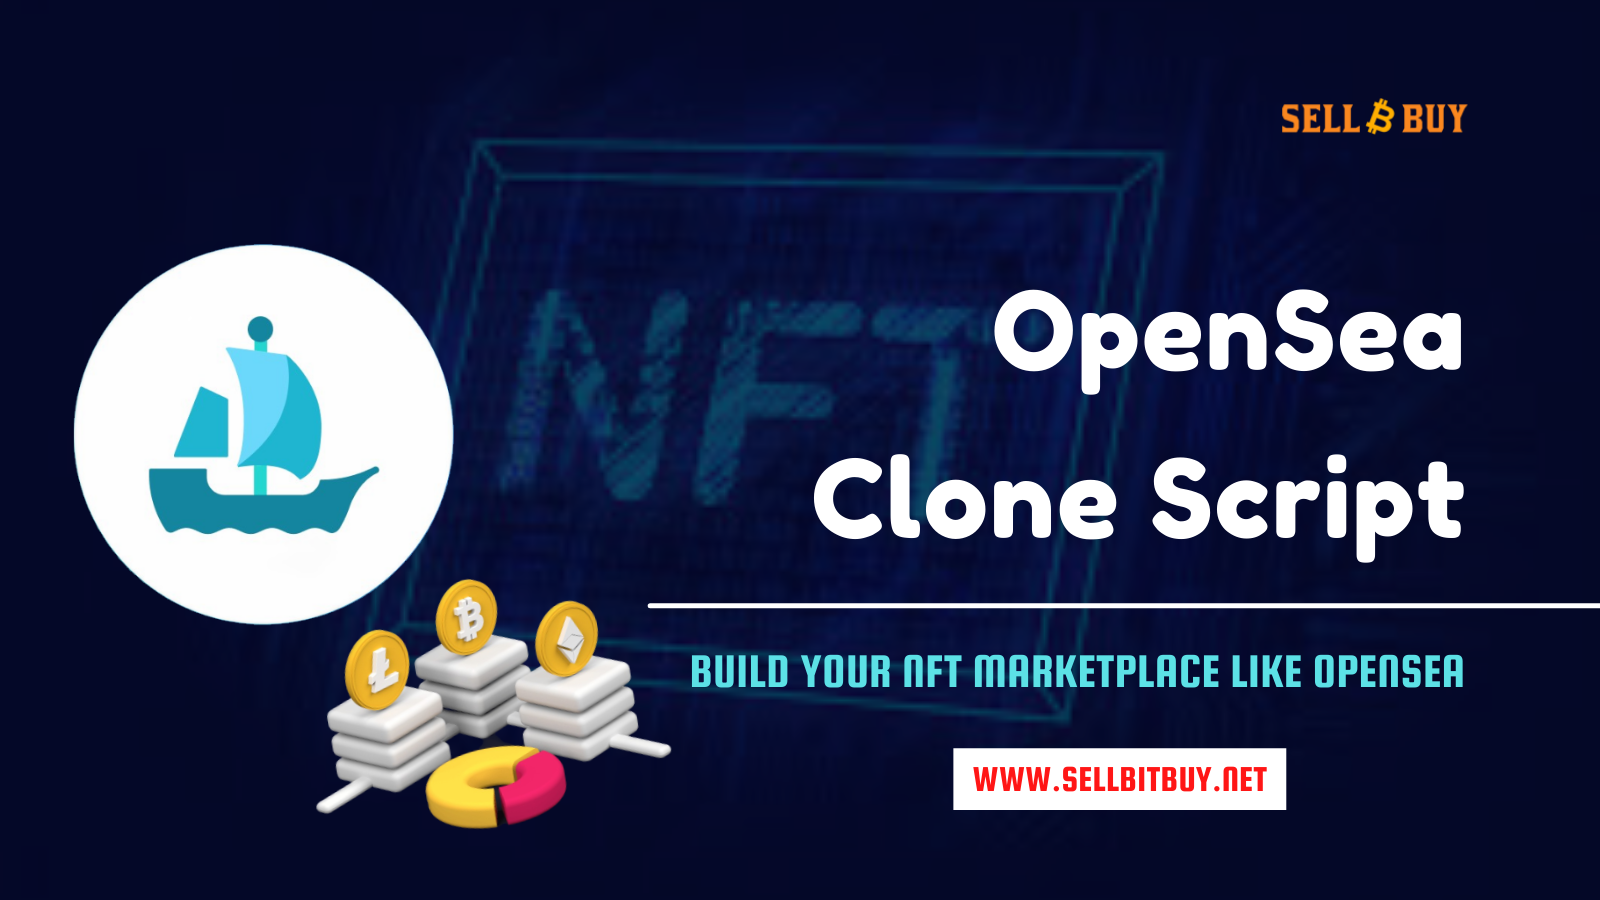 Article about Billion Dollar Business On - OpenSea NFT Marketplace